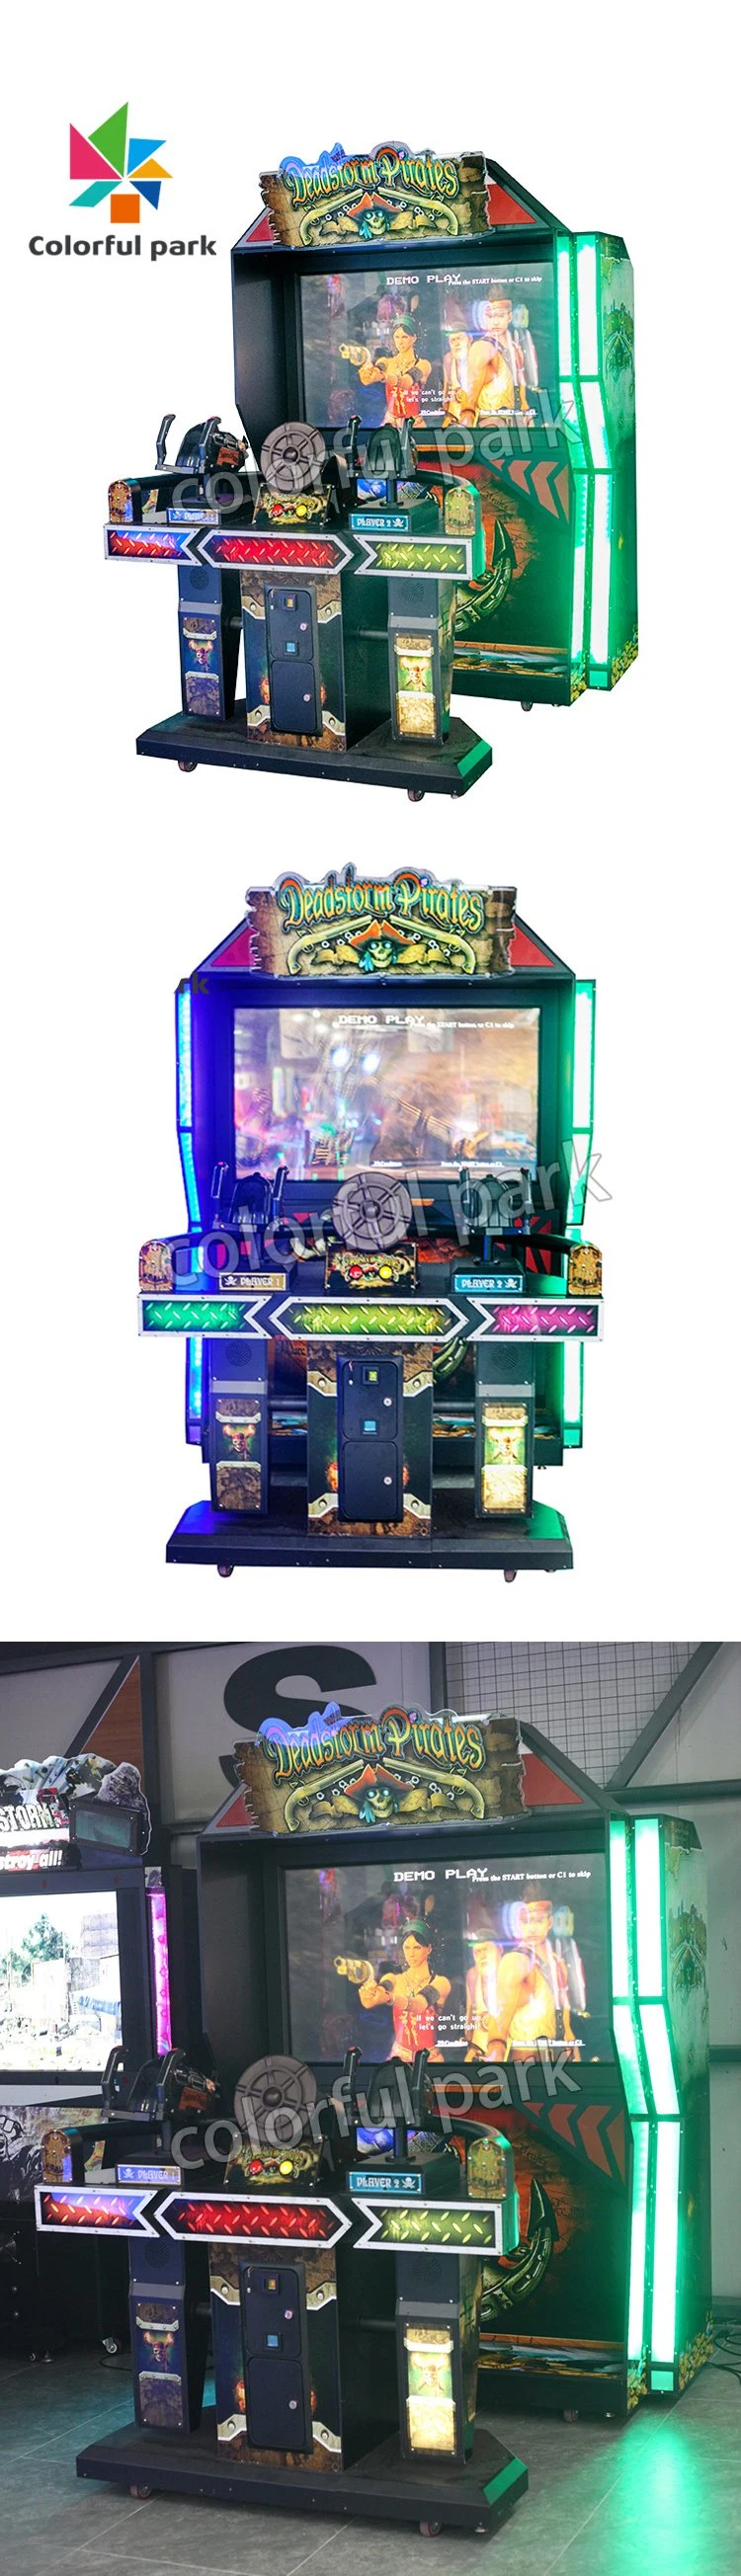 Colorful Park Arcade Shooting Game Simulator Indoor Shoot Arcade Machine Shooting Game Machine